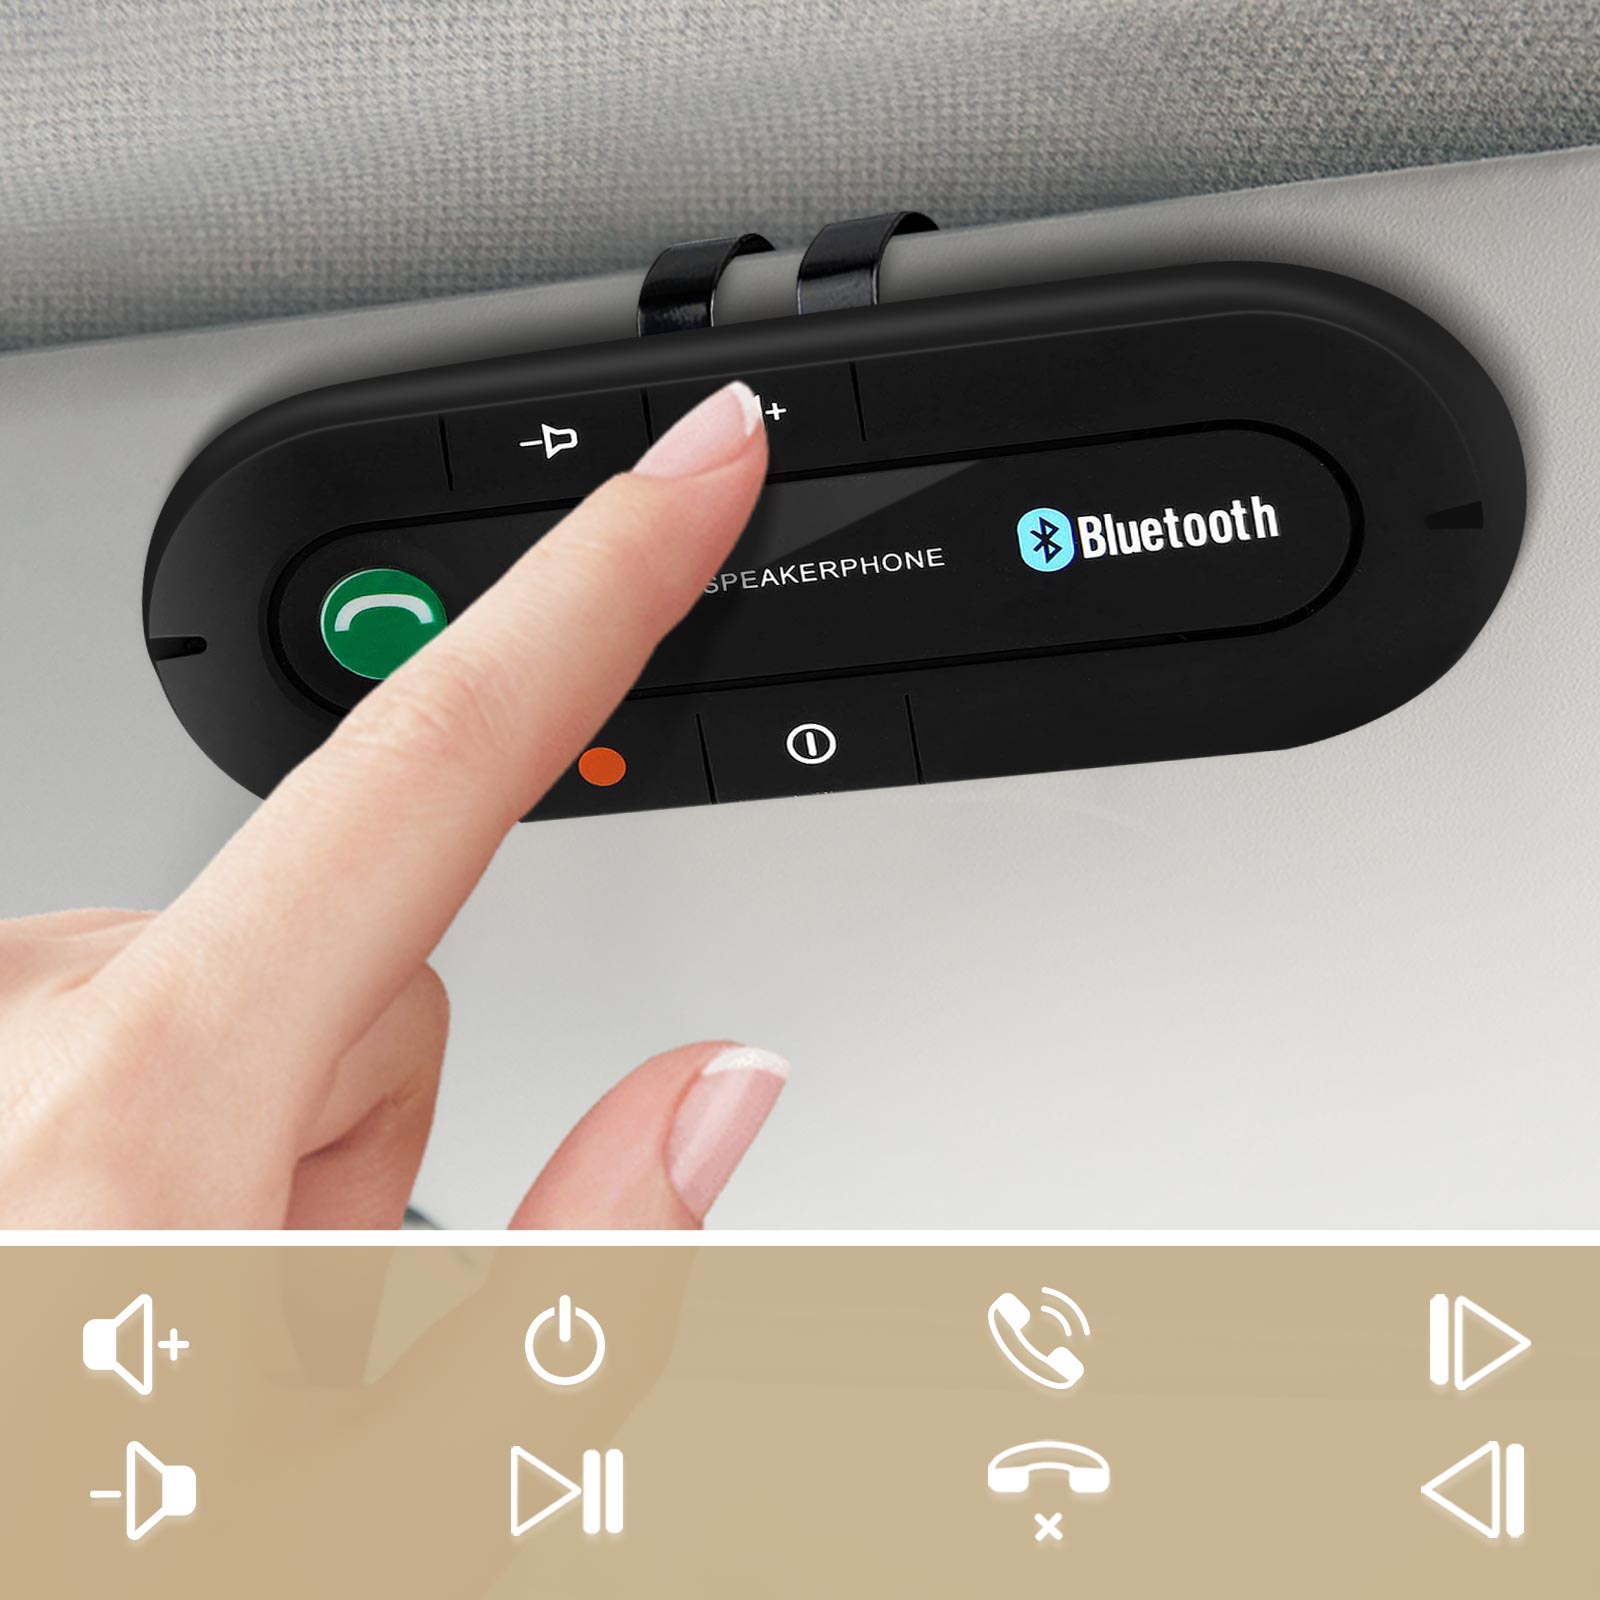 Kit Vivavoce Bluetooth Per Auto. PianetaBatterie